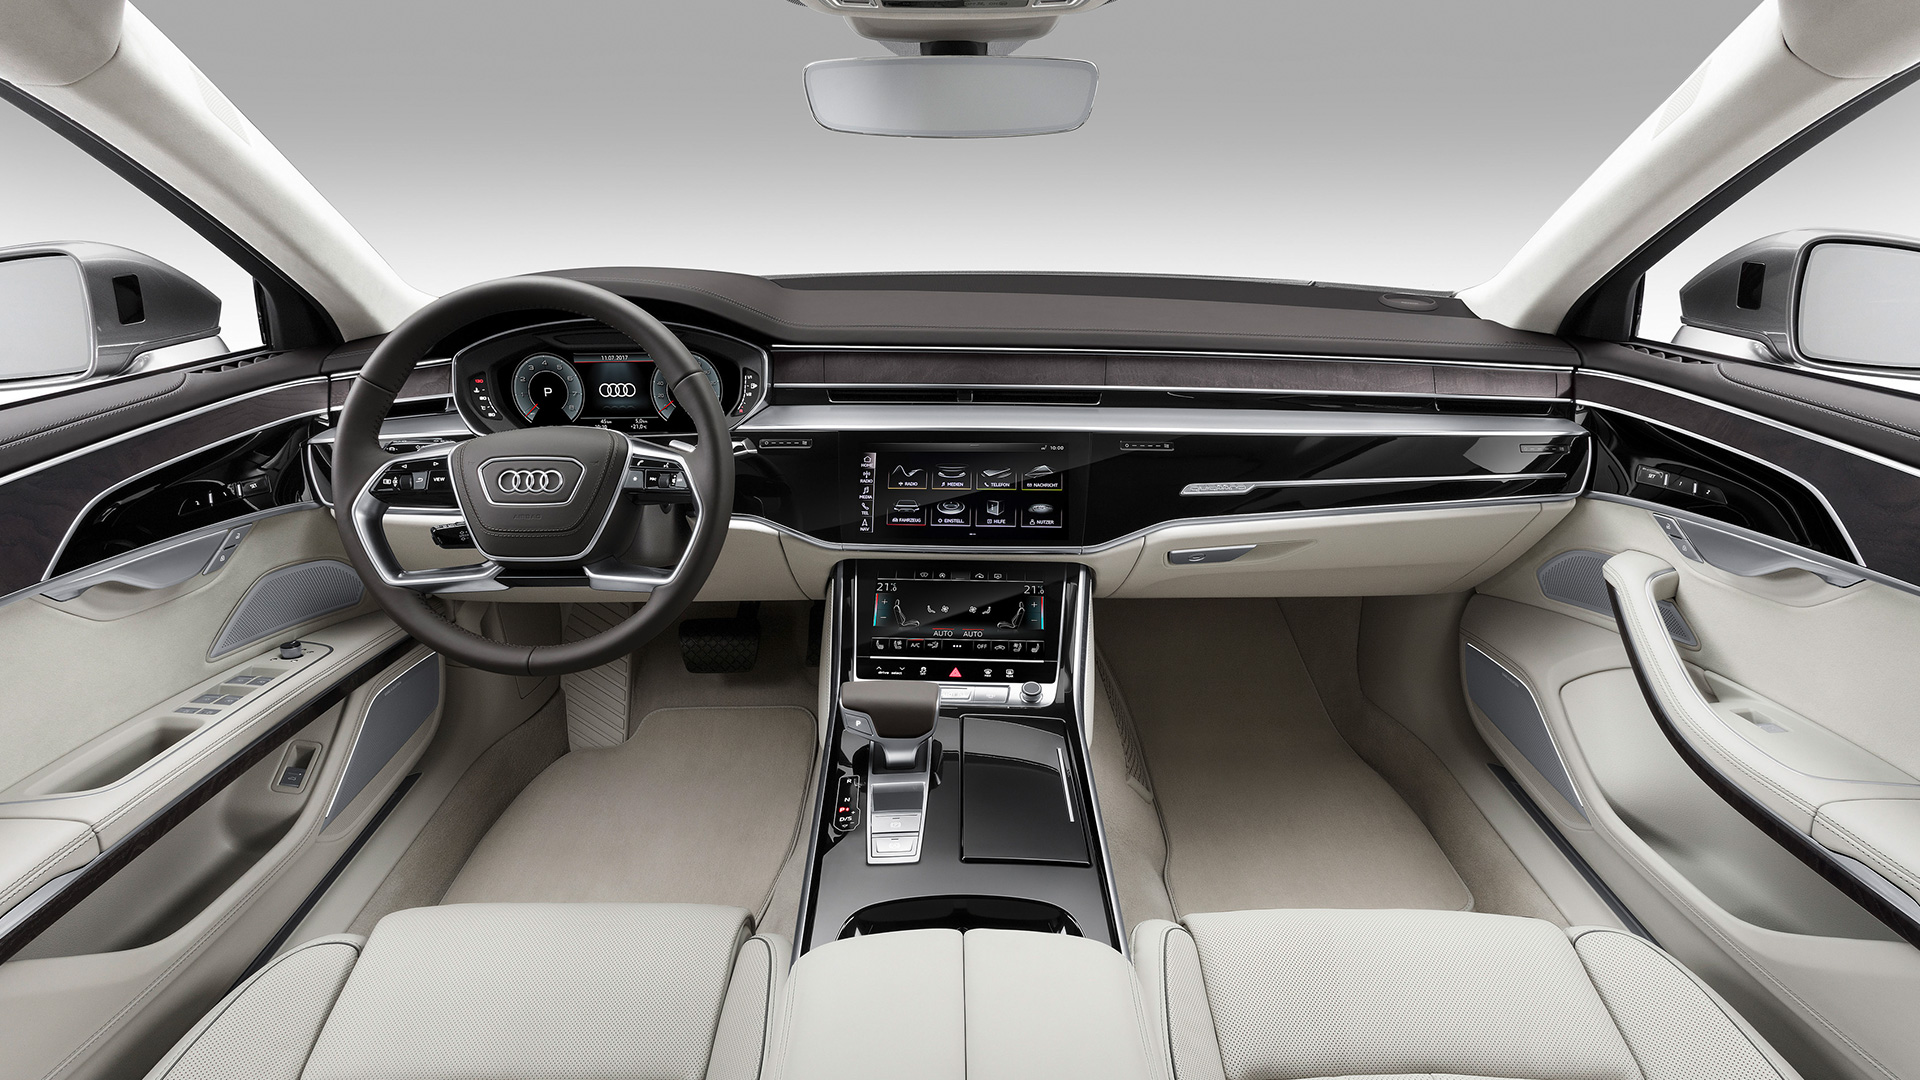 Audi A8l 2020 55 TFSI quattro Interior